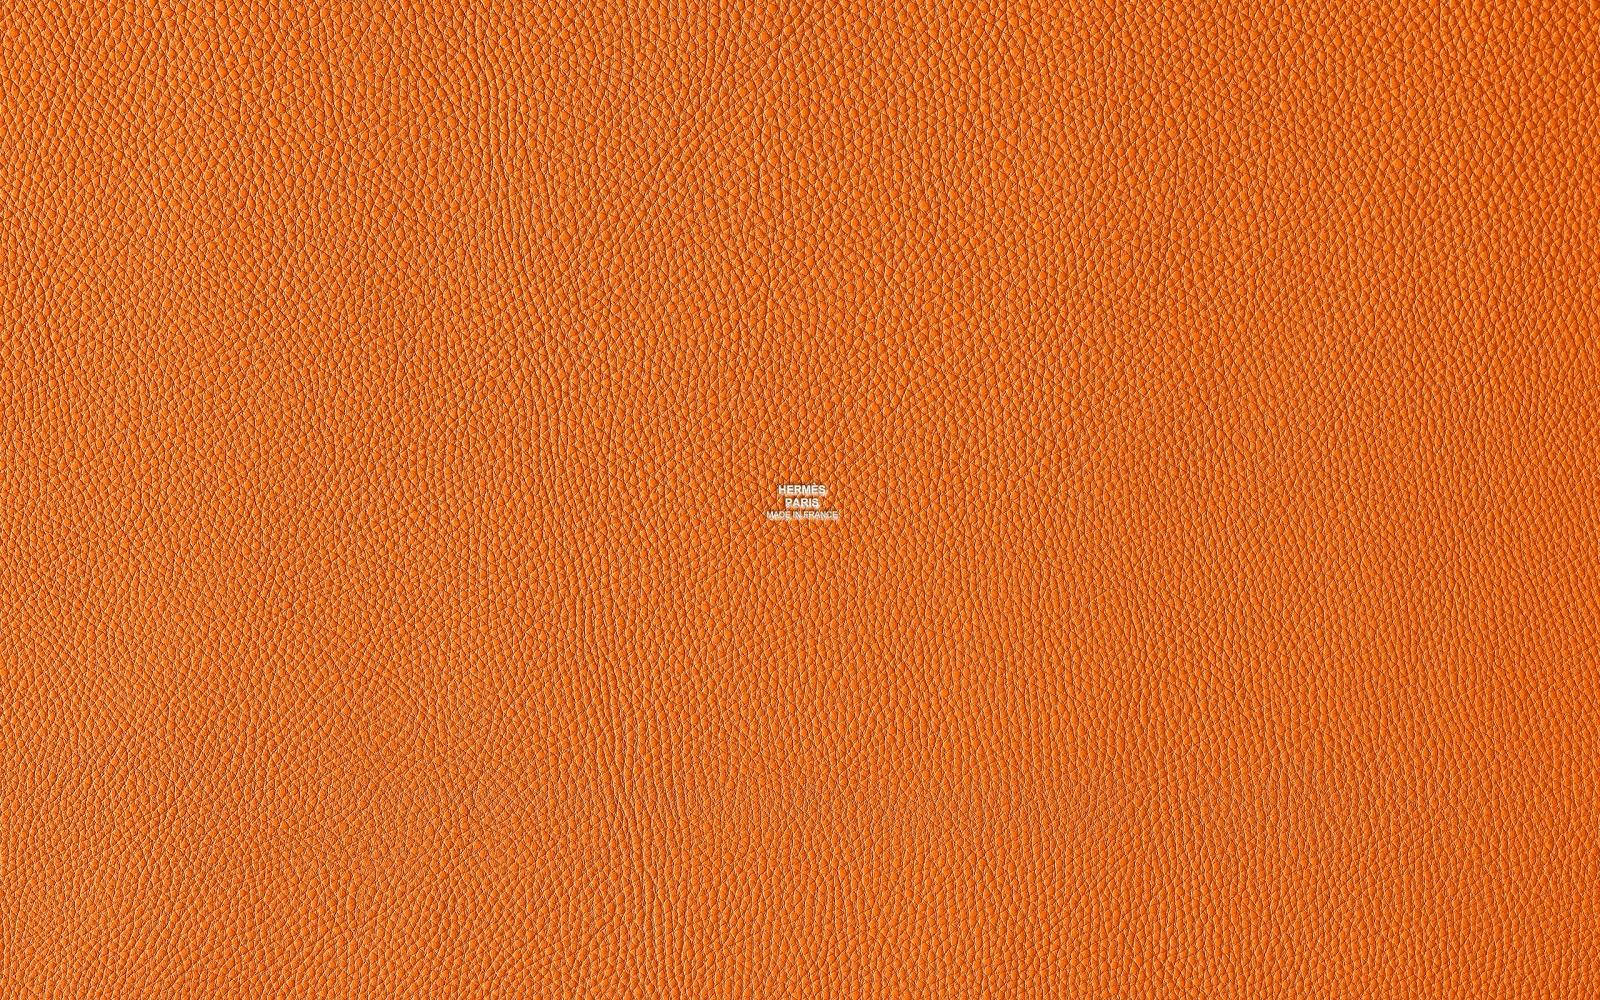 Hermes Logo On Textured Orange Background